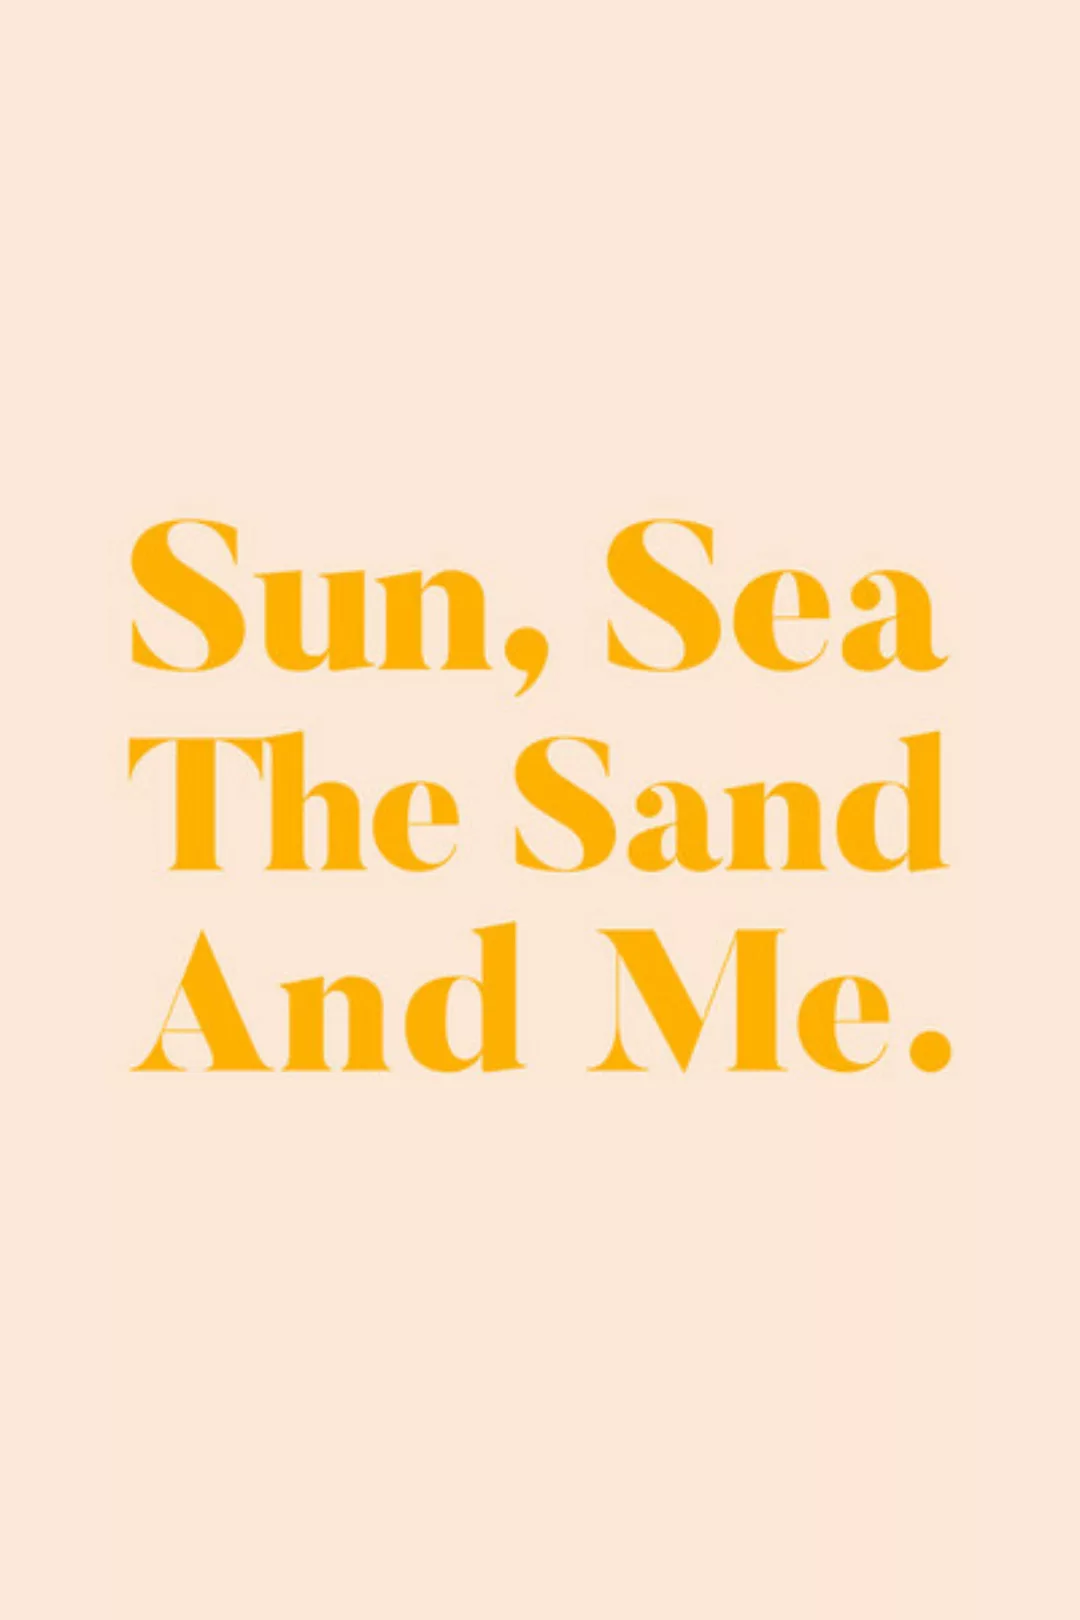 Poster / Leinwandbild - Sun, Sea, The Sand & Me günstig online kaufen